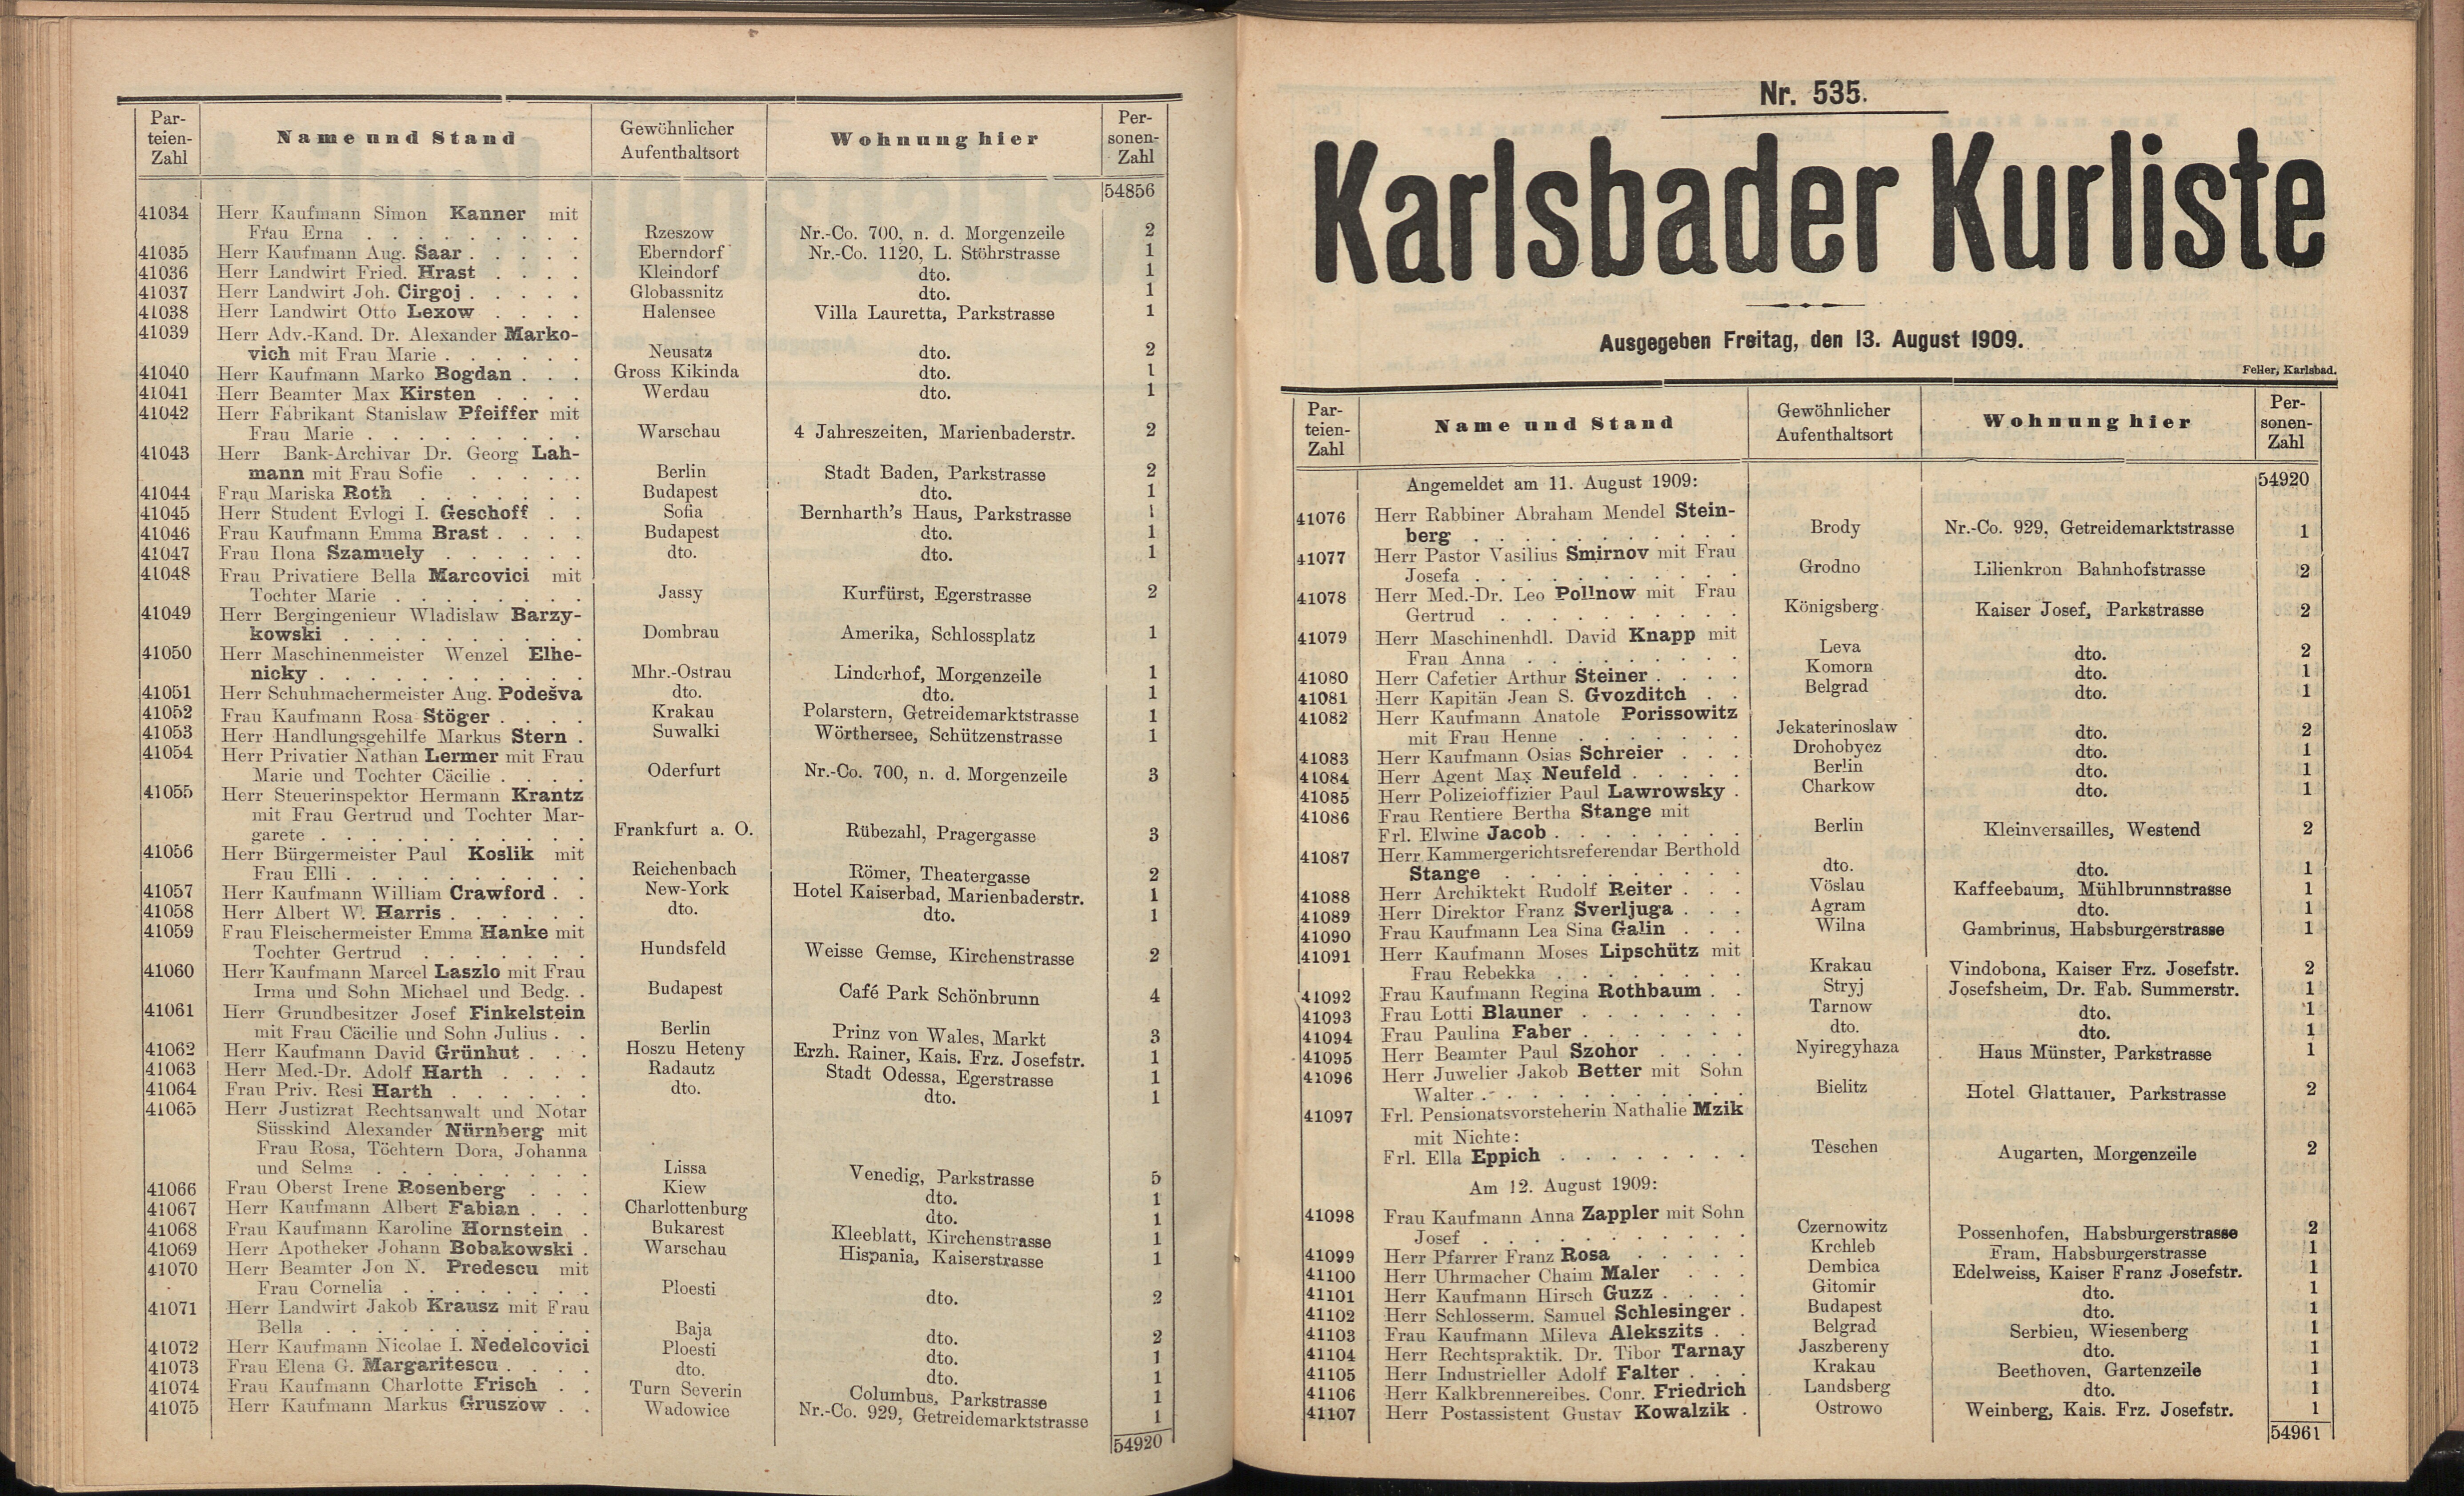 656. soap-kv_knihovna_karlsbader-kurliste-1909_6560